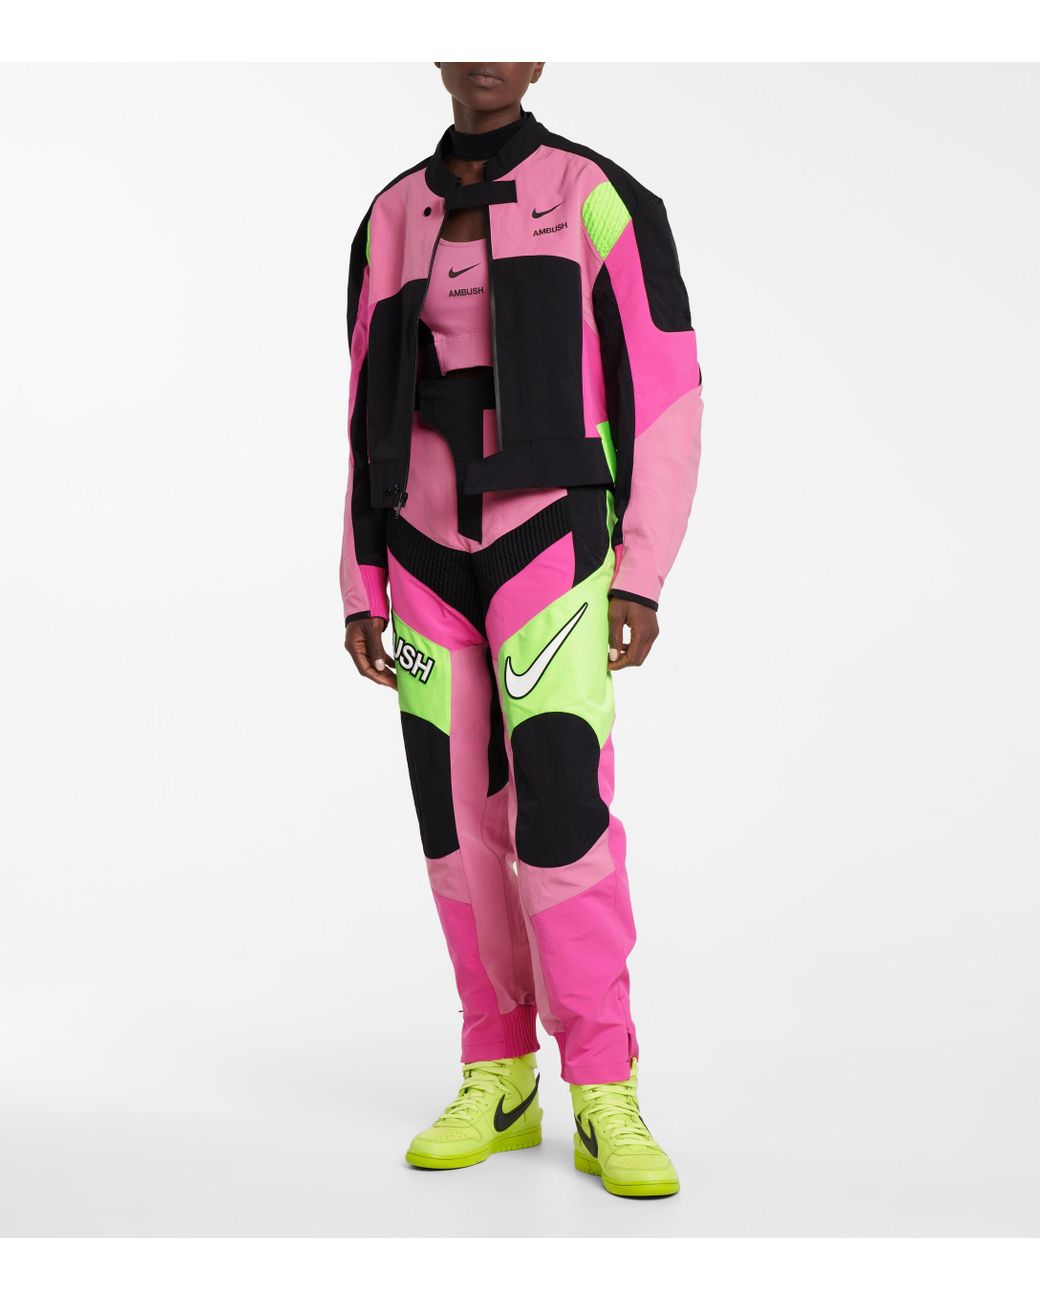 Nike X Ambush Motorcycle Jacket in Pink | Lyst Canada